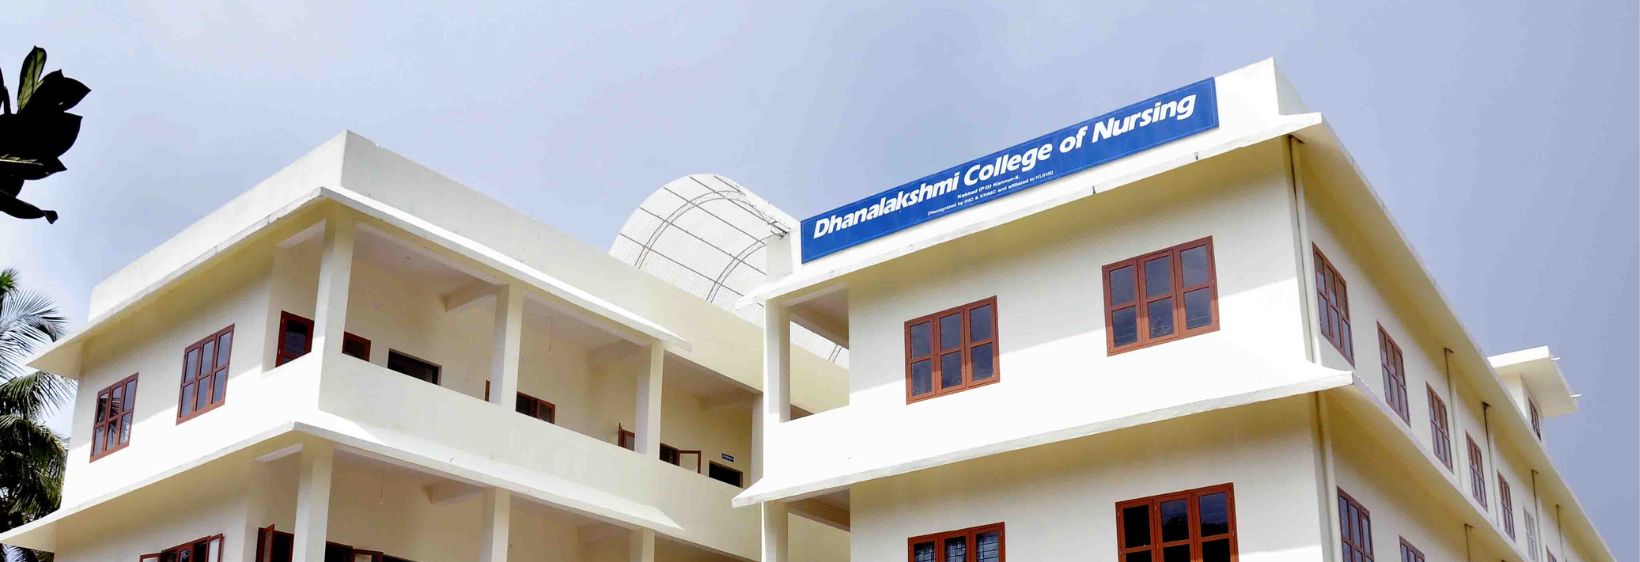 Dhanalekshmi College of Nursing - Kannur